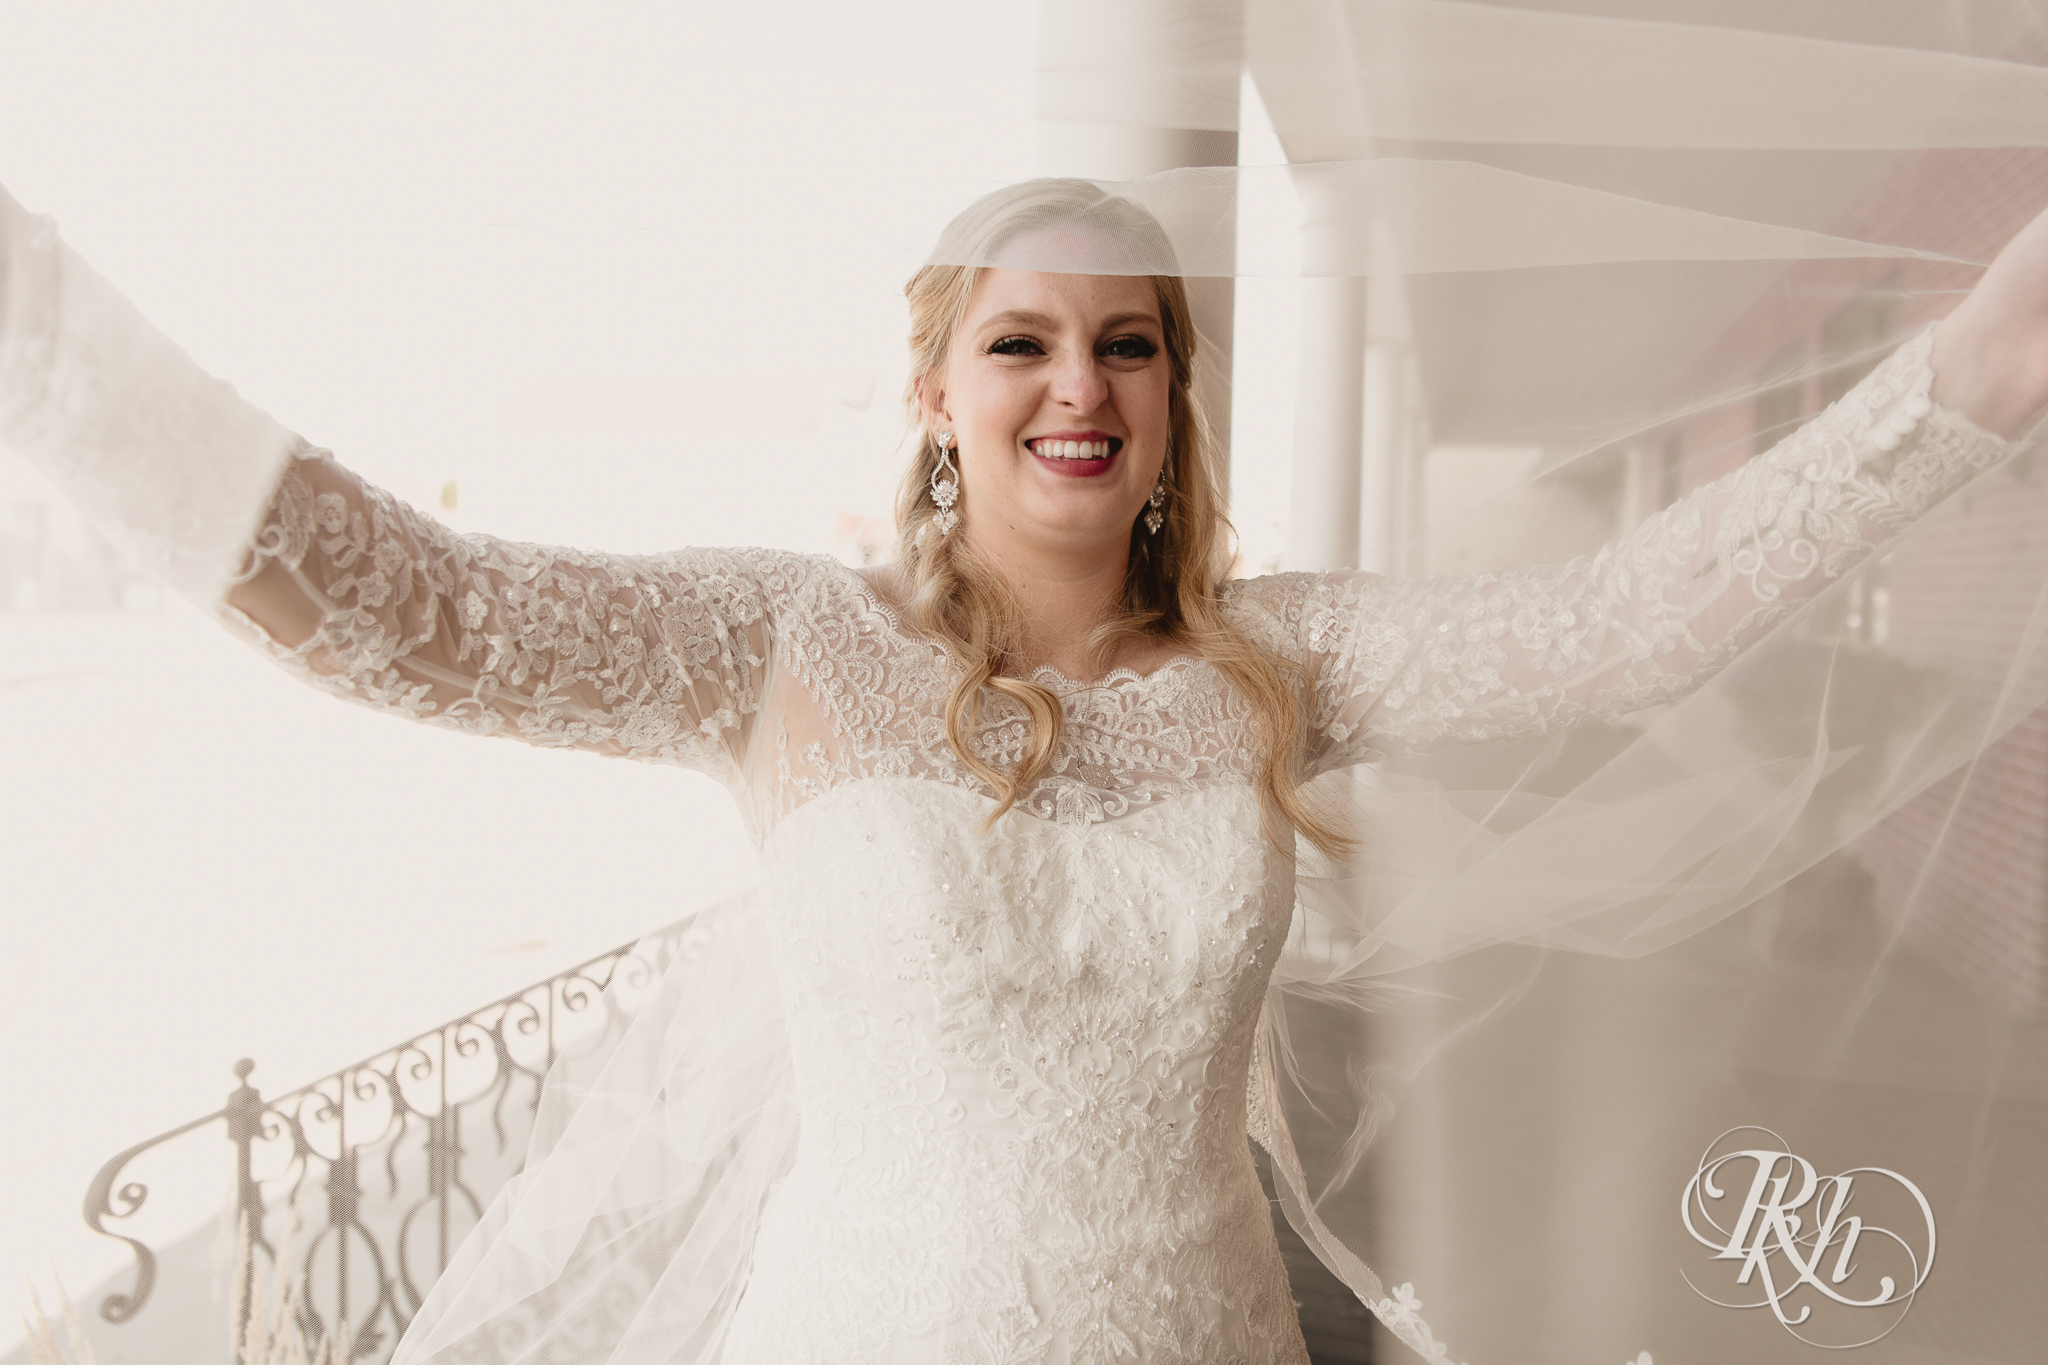 Bride smiles under veil at Weddings at the Broz in New Prague, Minnesota.